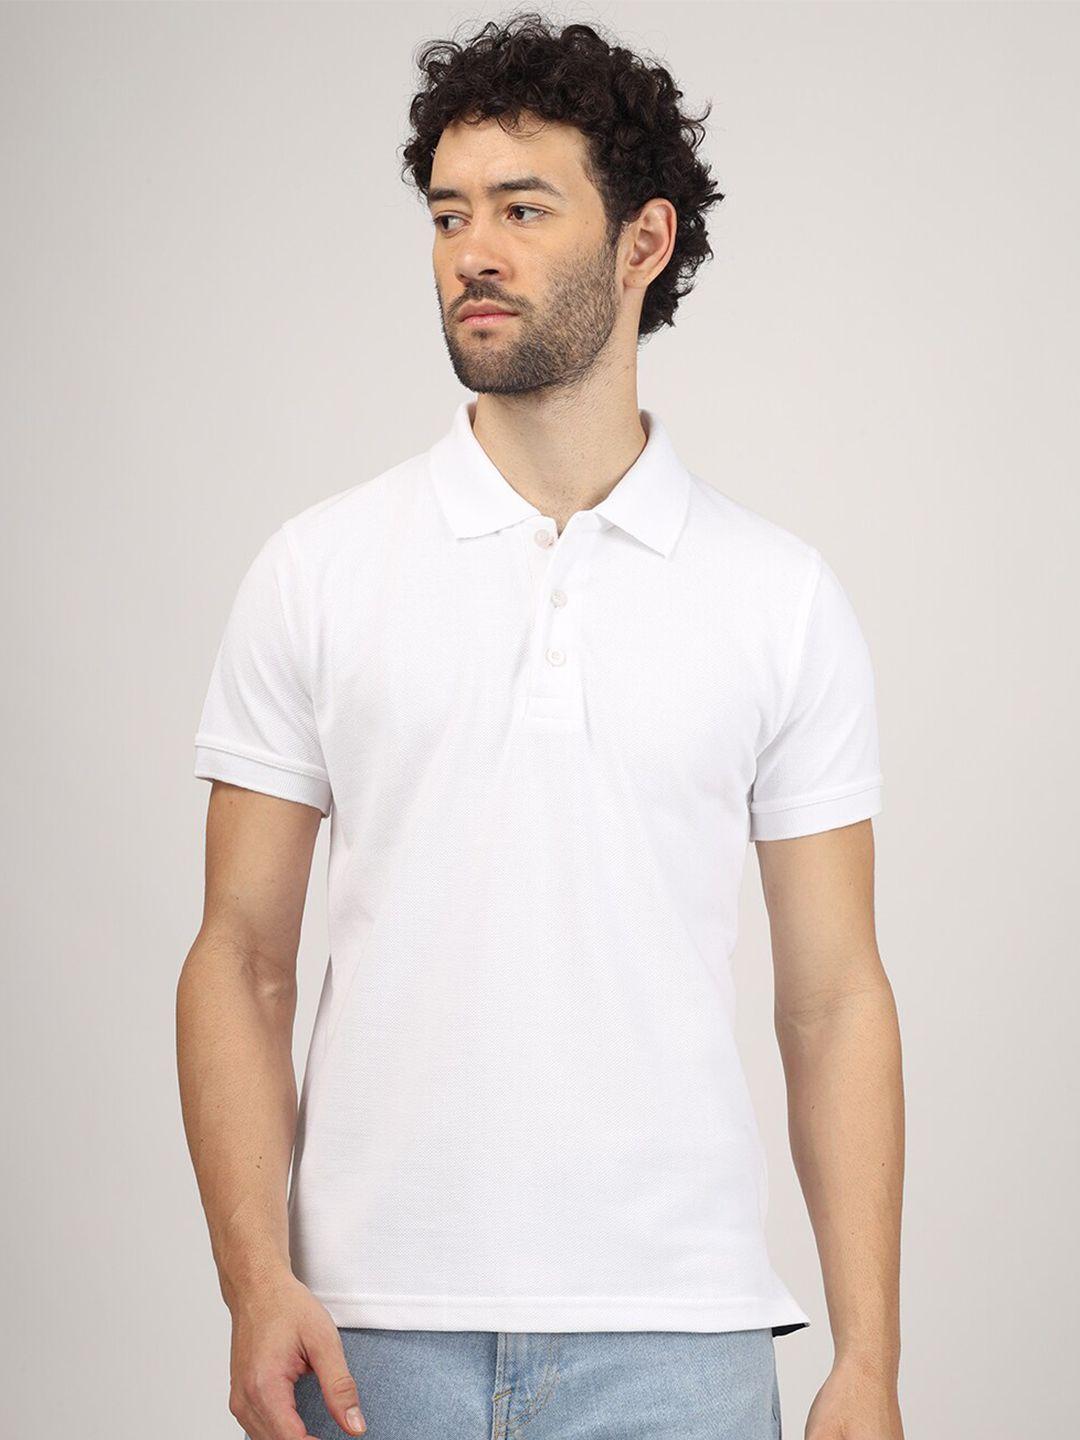 greylongg polo collar short sleeves t-shirt